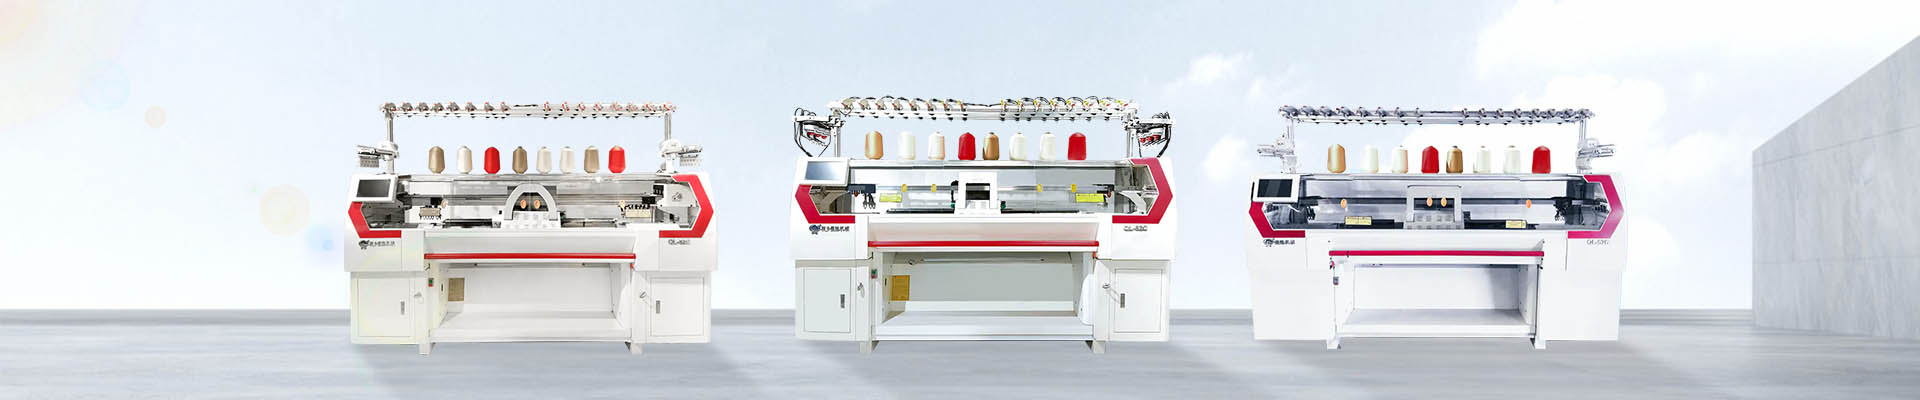 China Automatic Sweater Knitting Machine Suppliers, Manufacturers